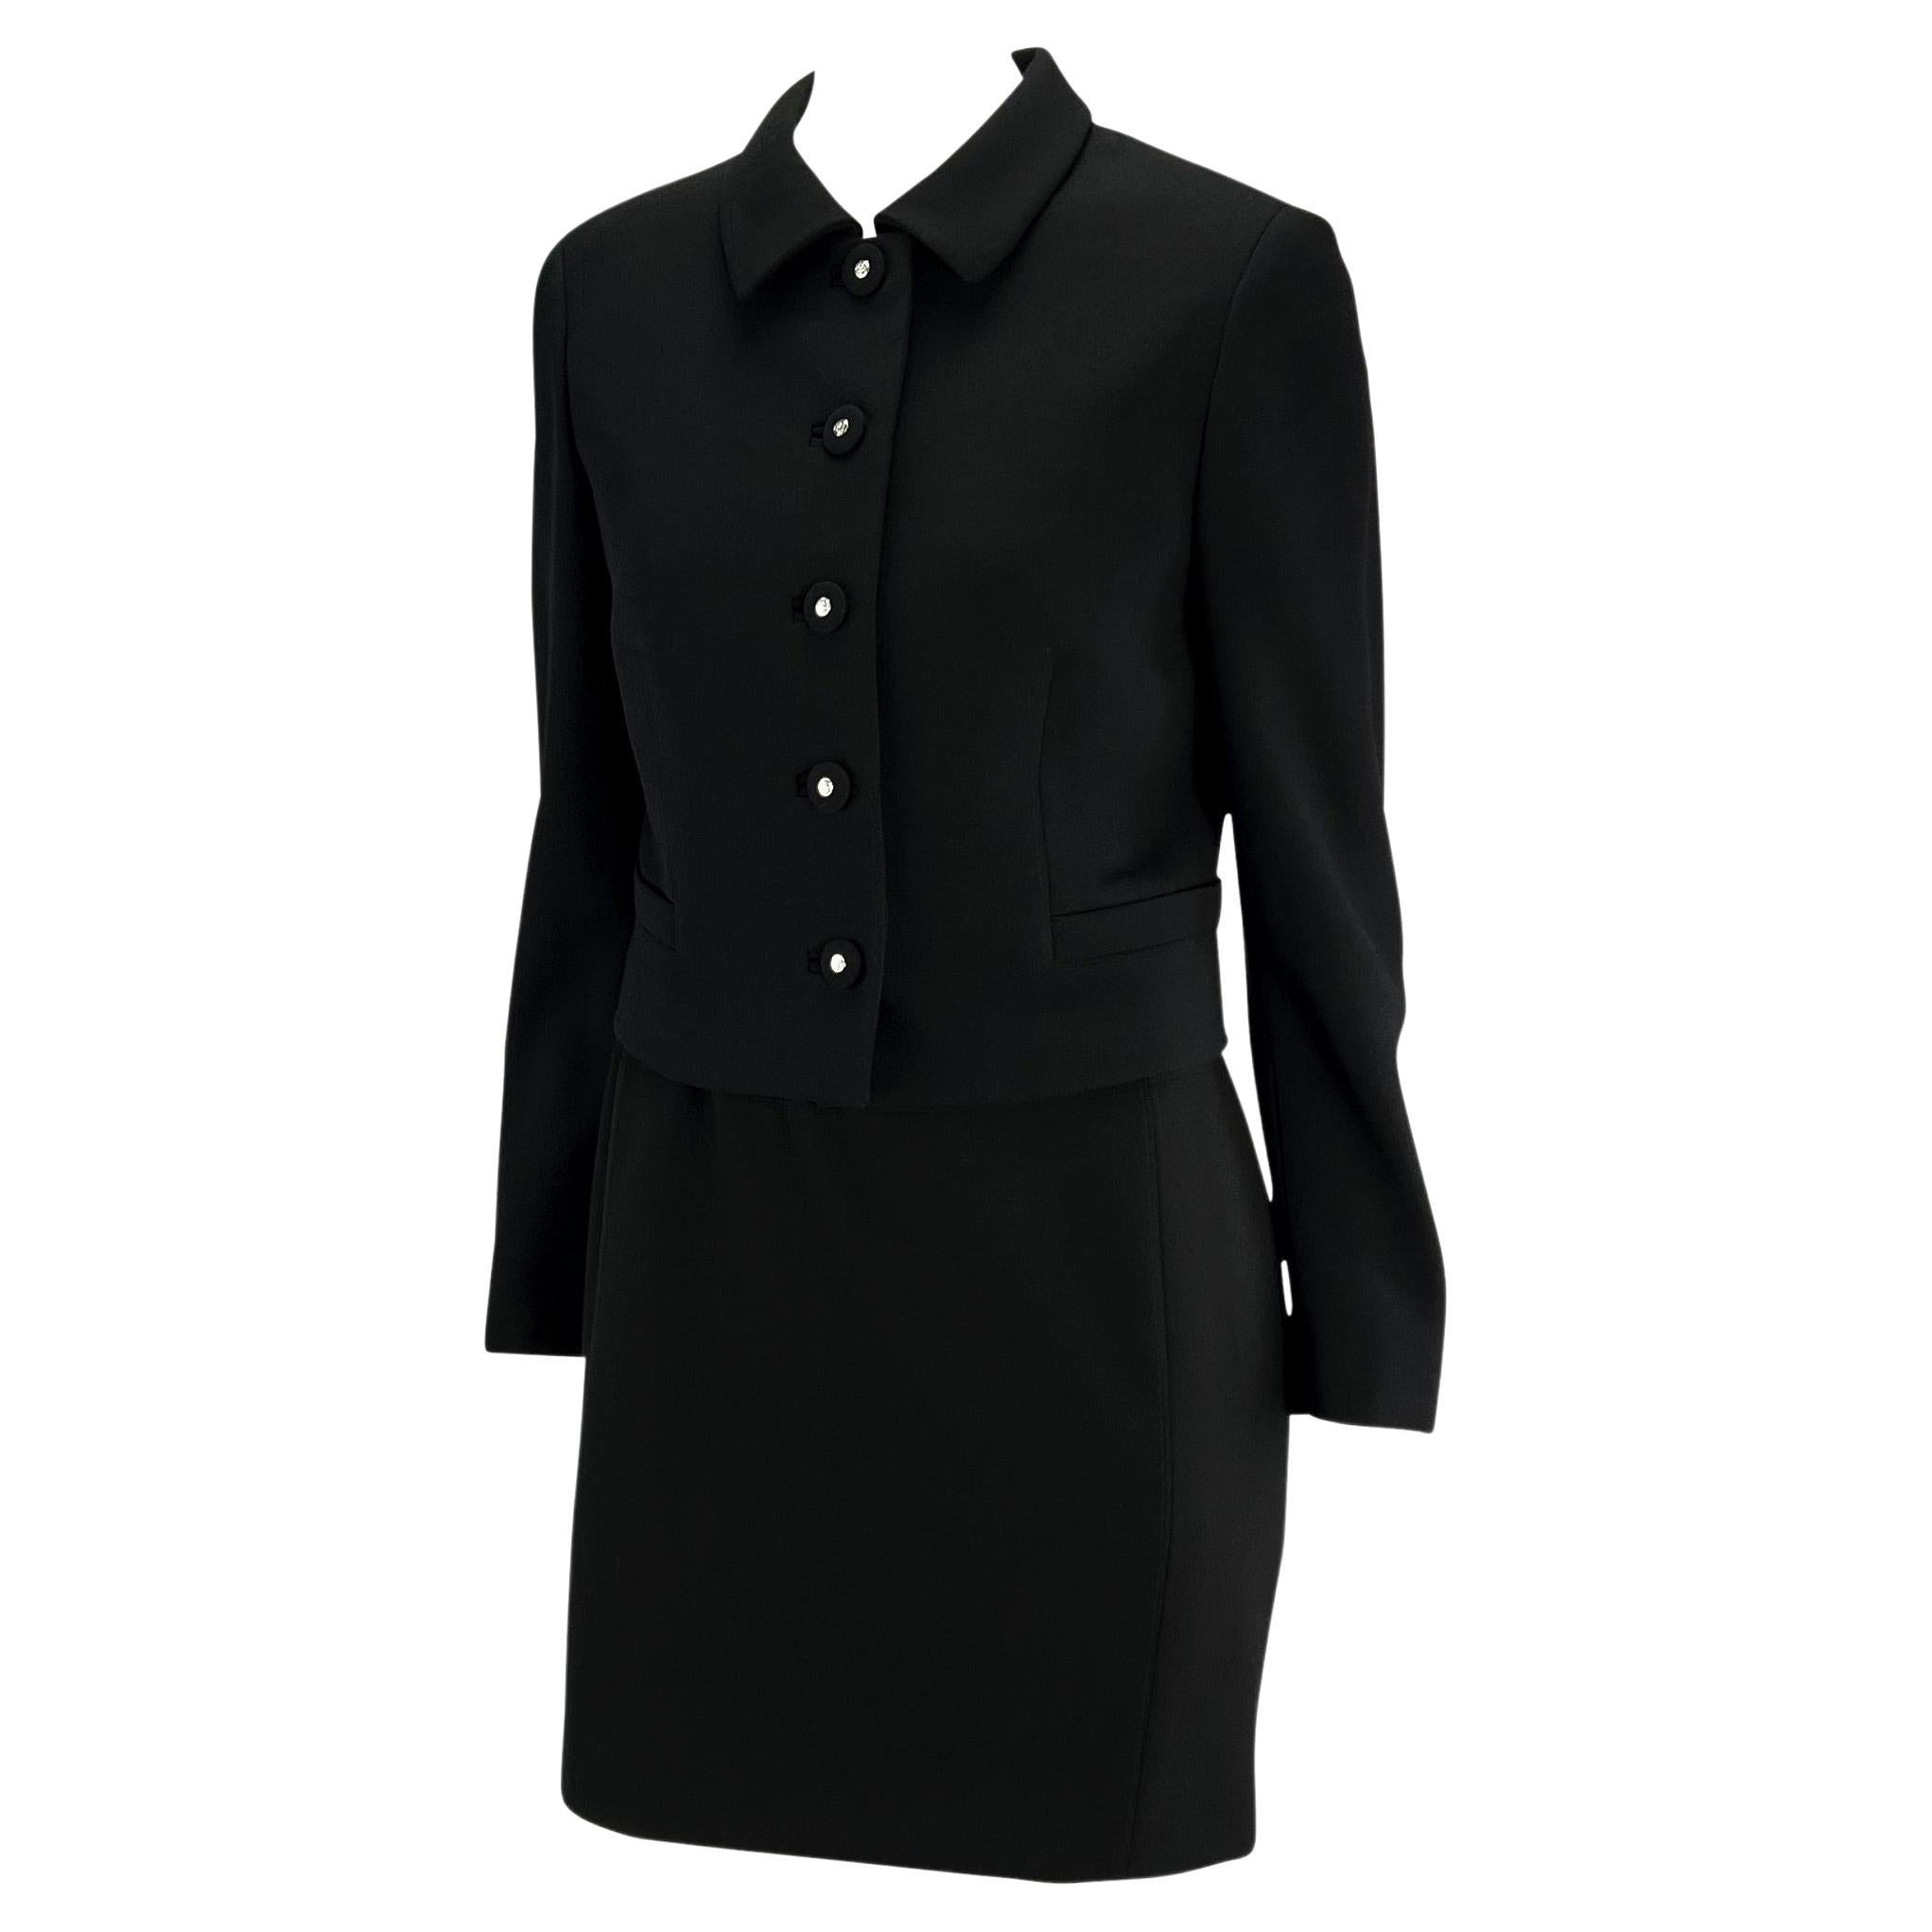 S/S 1996 Gianni Versace Couture Black Wool Medusa Button Dress Jacket Set For Sale 1